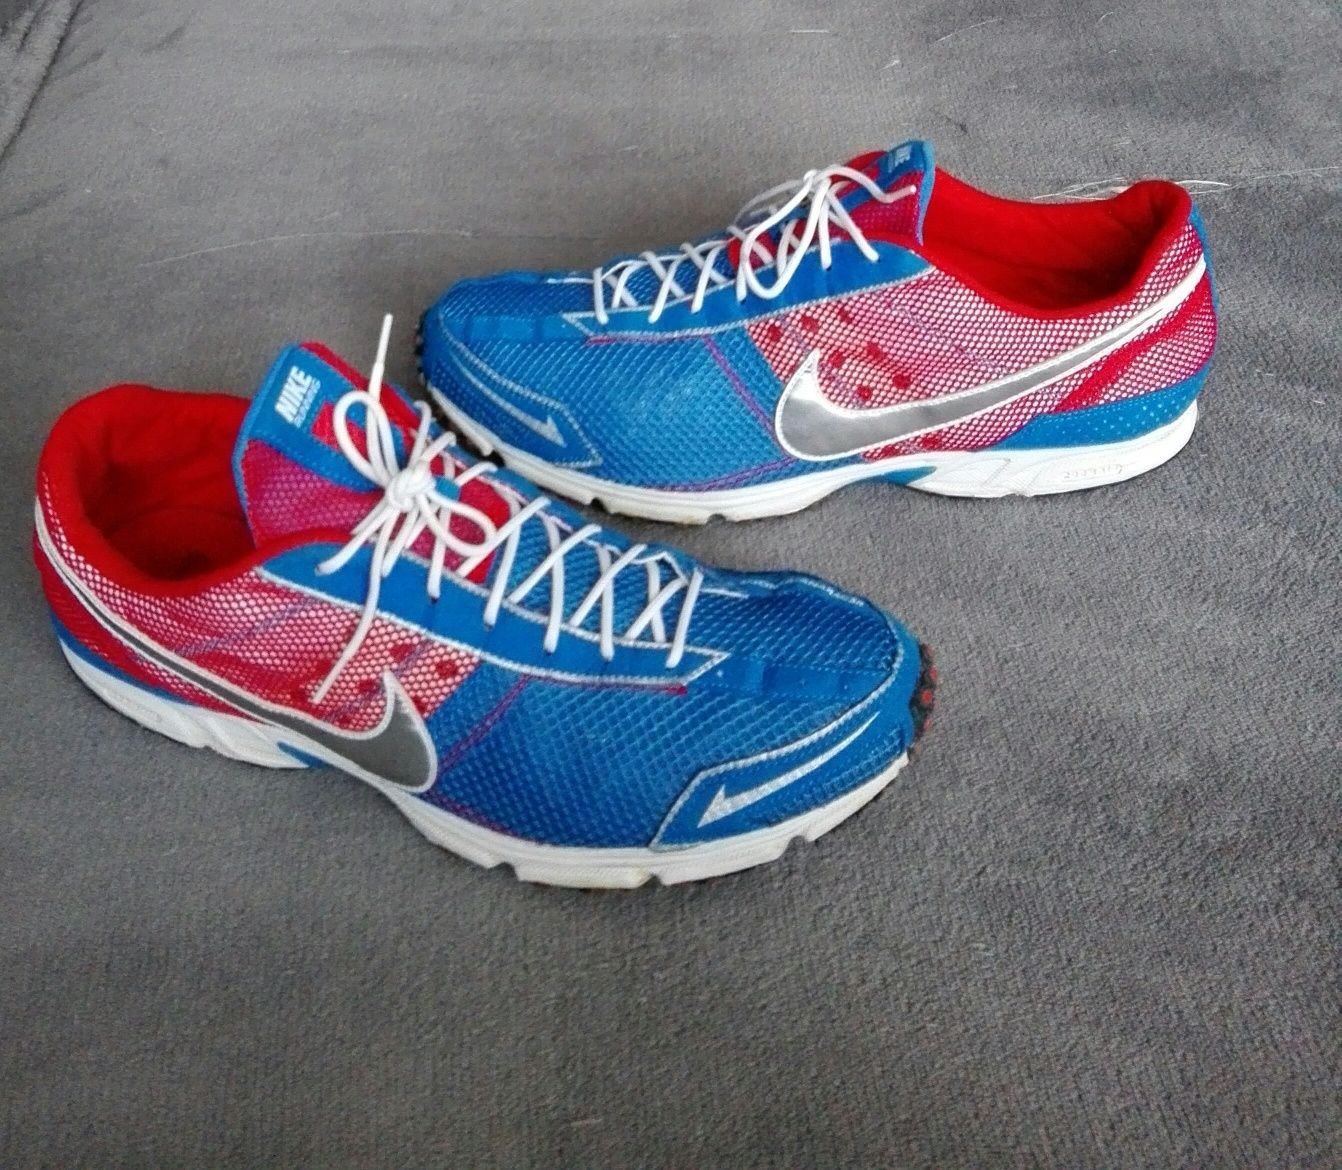 Nike air zoom katana RAC3R III oryginalne buty sportowe do biegania r